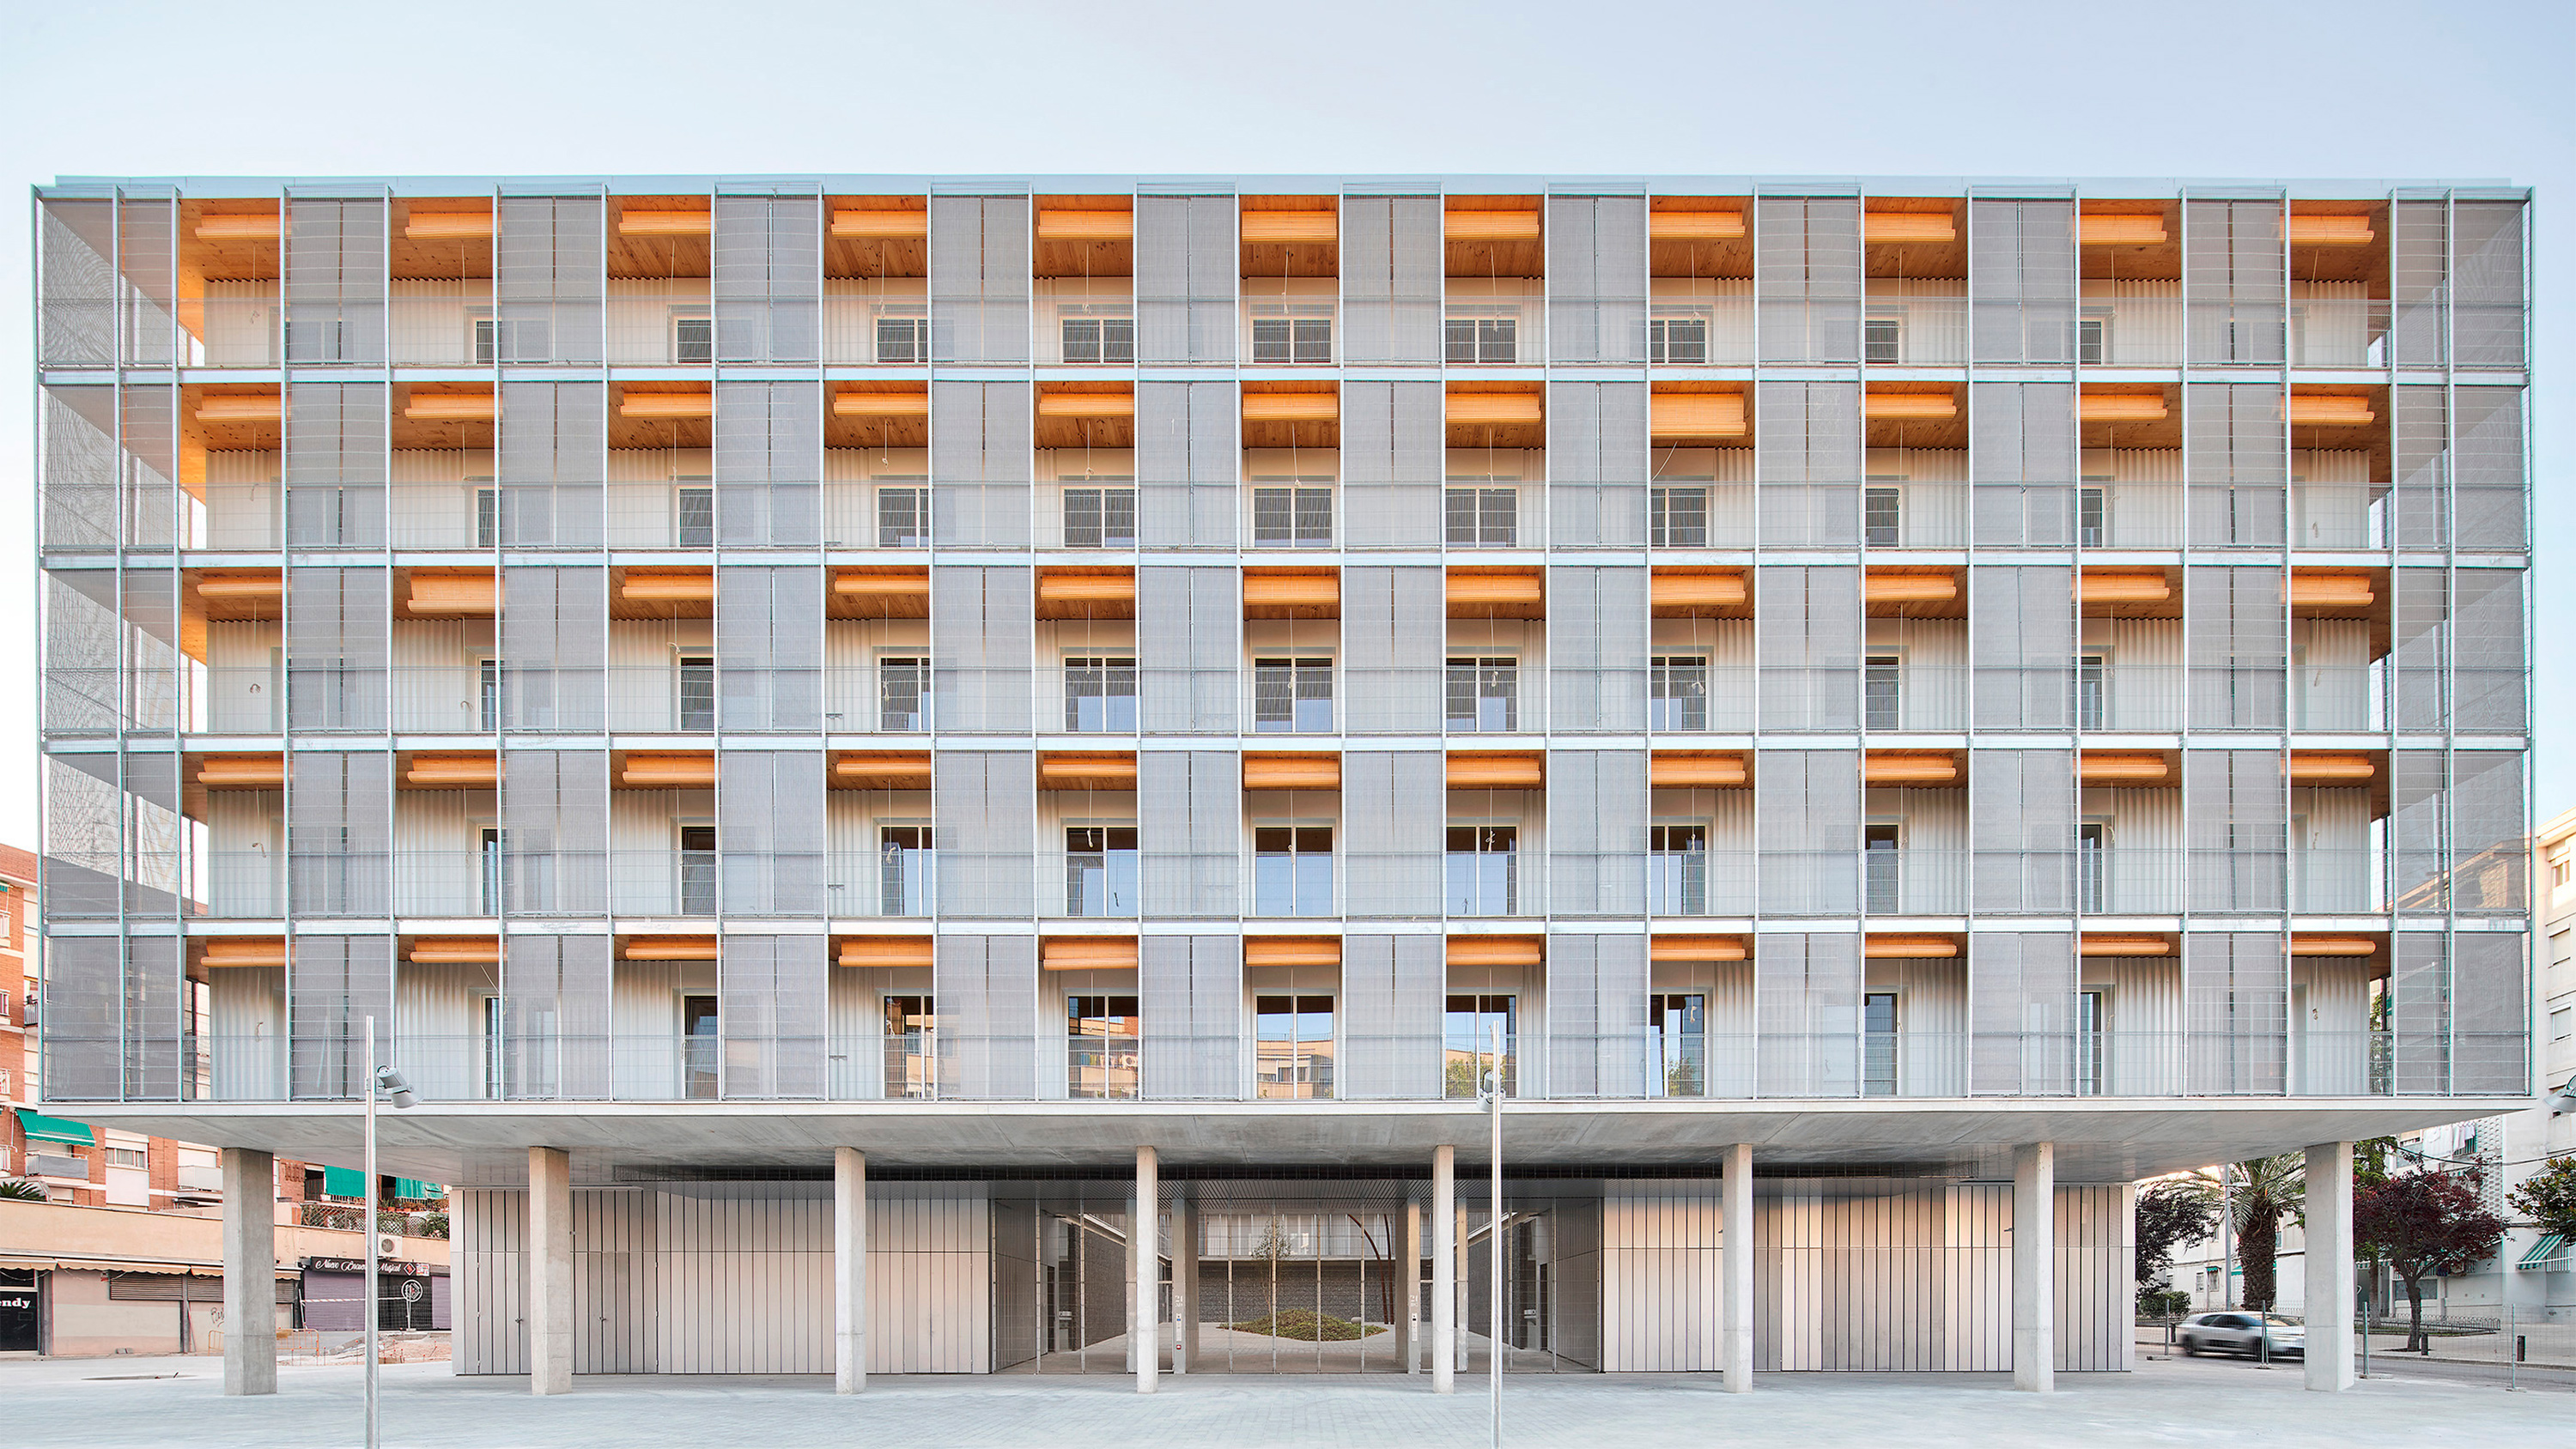 85 viviendas sociales Cornellá de Llobregat - Toral arquitectes | Arquitectura Viva